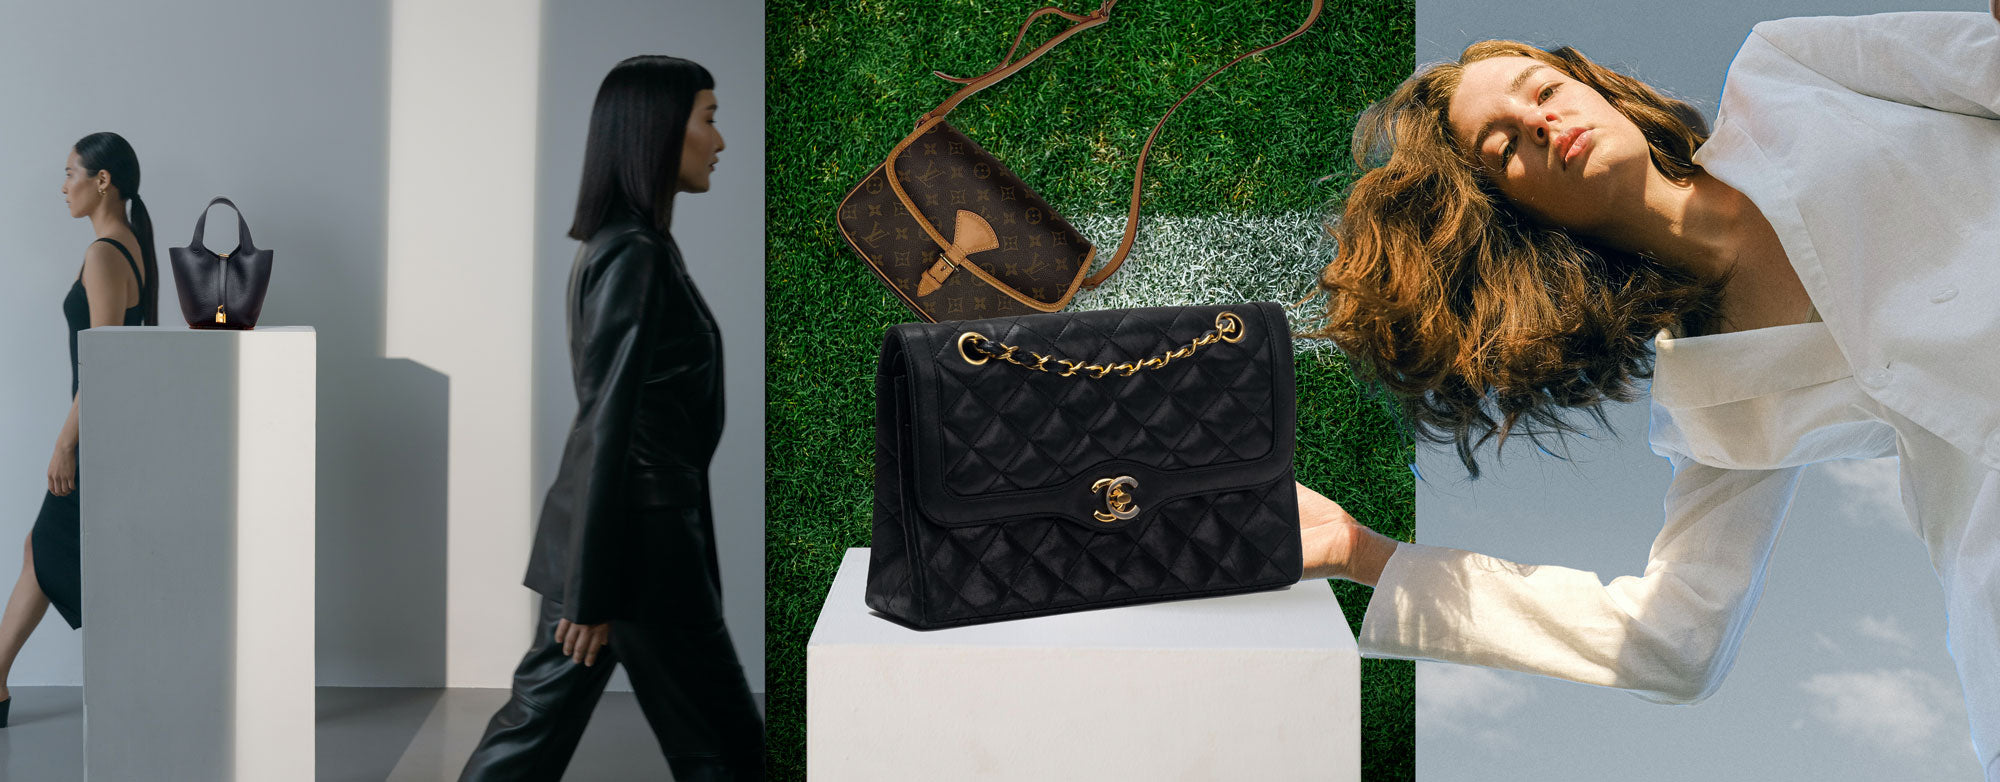 Diane Satchel - Luxury All Collections - Handbags